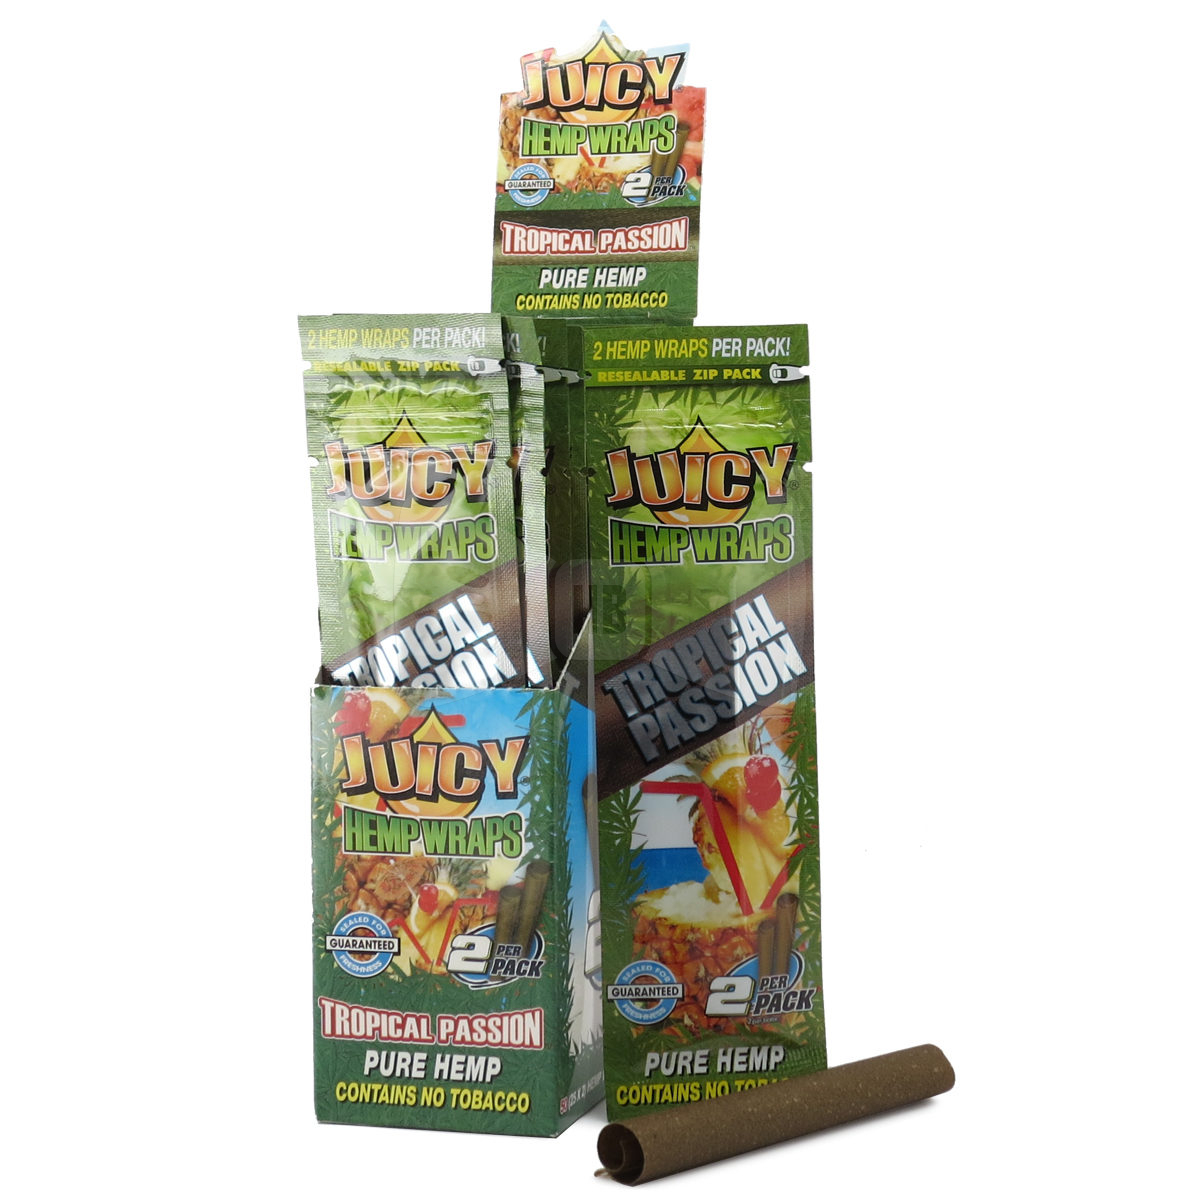 Juicy Jay Hemp Wraps Box Natural